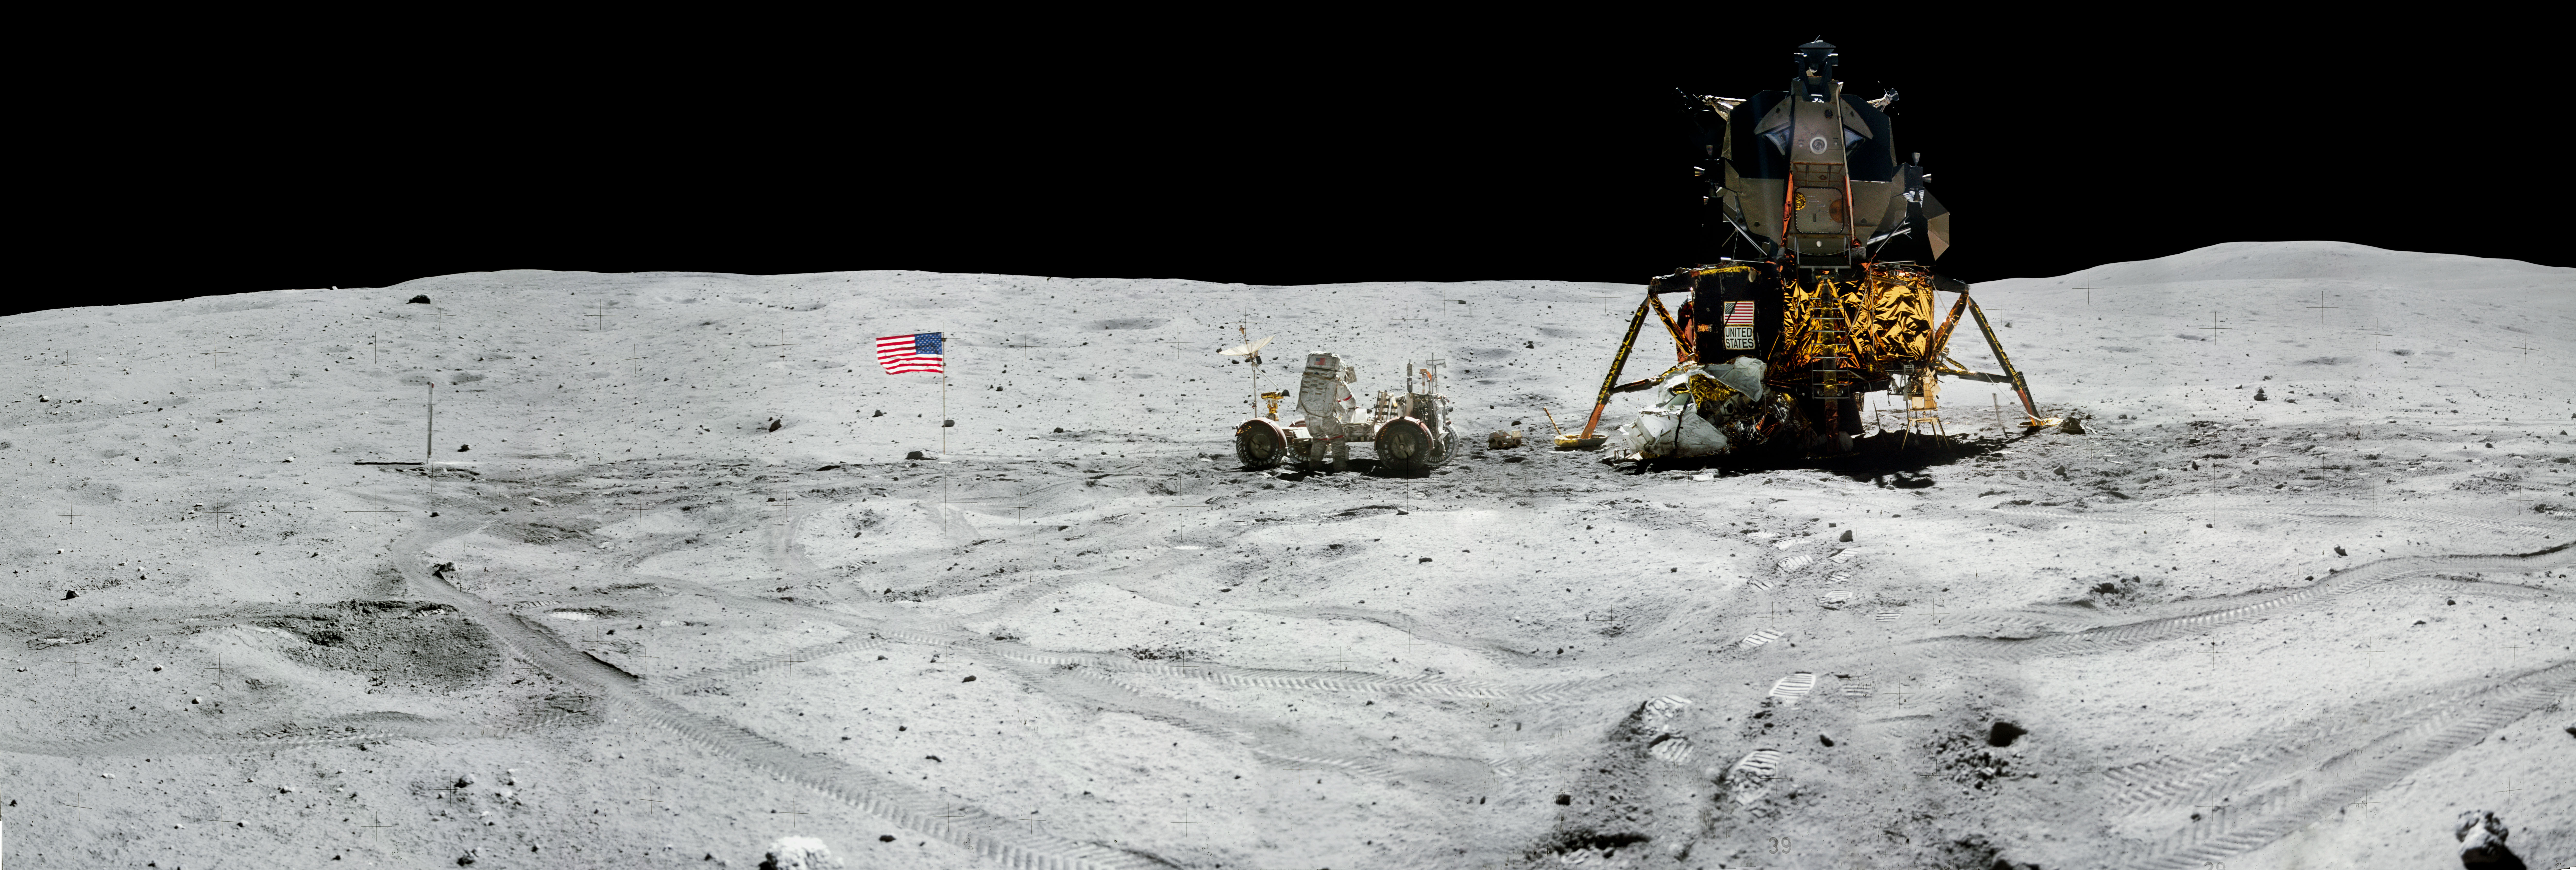 На луне можно жить. Миссия Аполлон 11. Аполлон-11 фото. Аполлон 16 на Луне 1972. Апполо 11 на Луне.